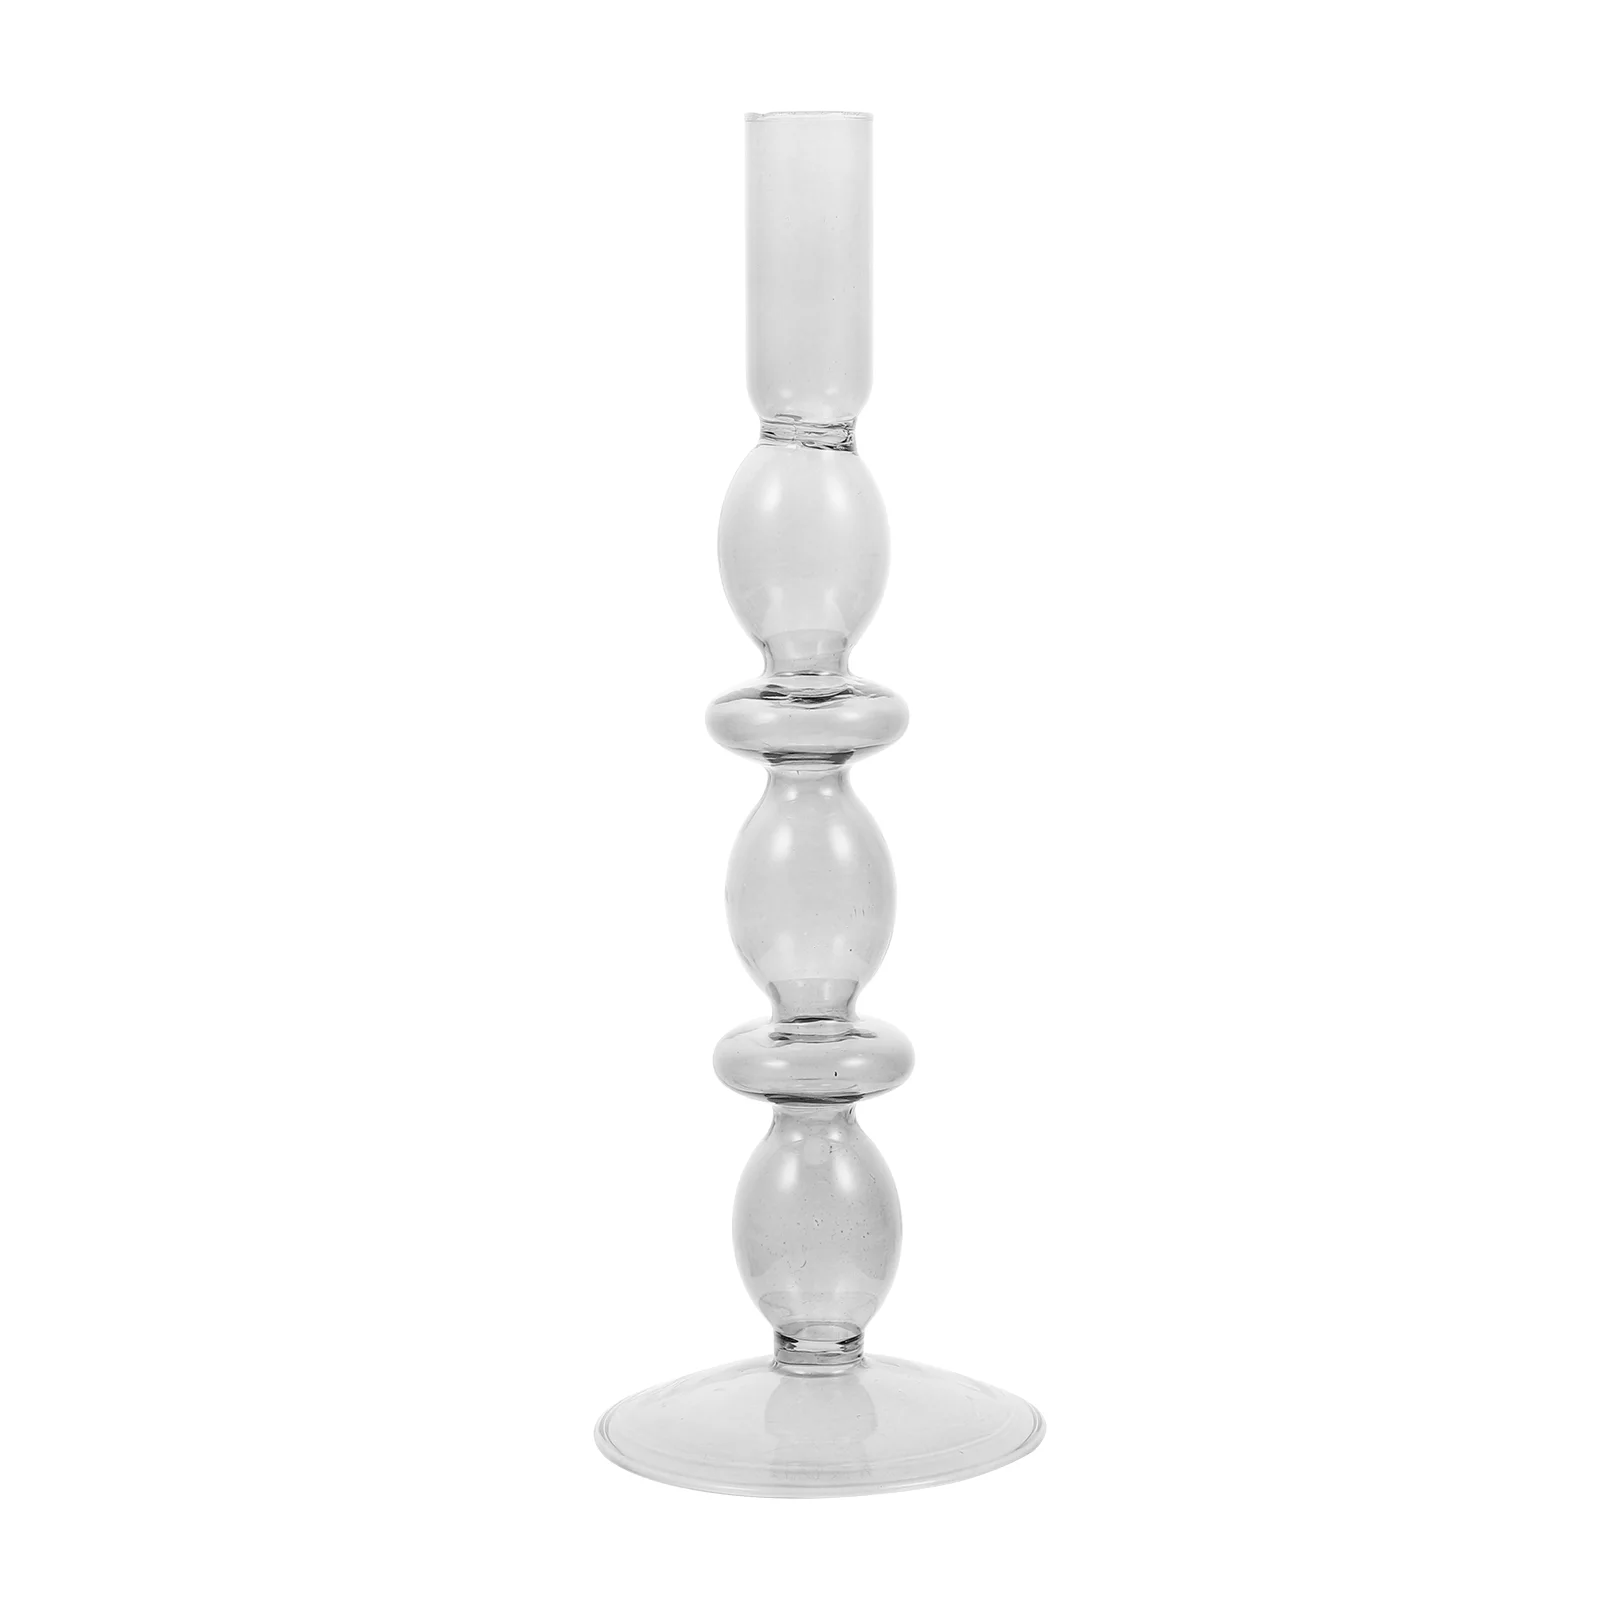 

Holder Holders Candlestick Pillar Clear Western Stand Decor Kitchen Tealight Candlesticks Taper Crystal Decorative Stick Tall